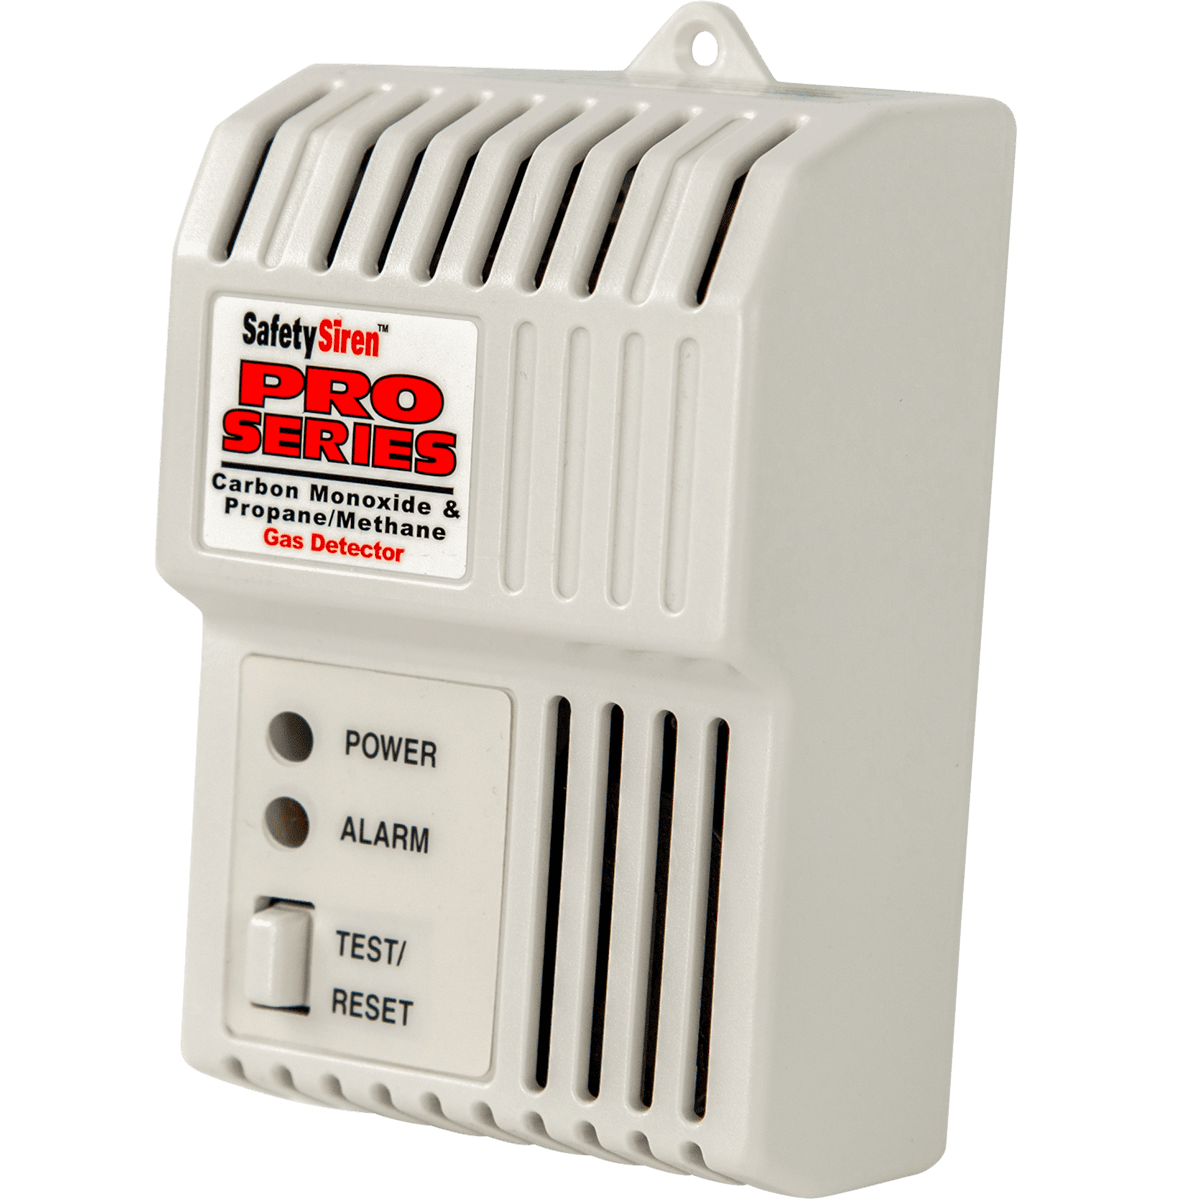 Propane & Methane HS80504 Safety Siren 3 in 1 Gas Detector  Carbon Monoxide 